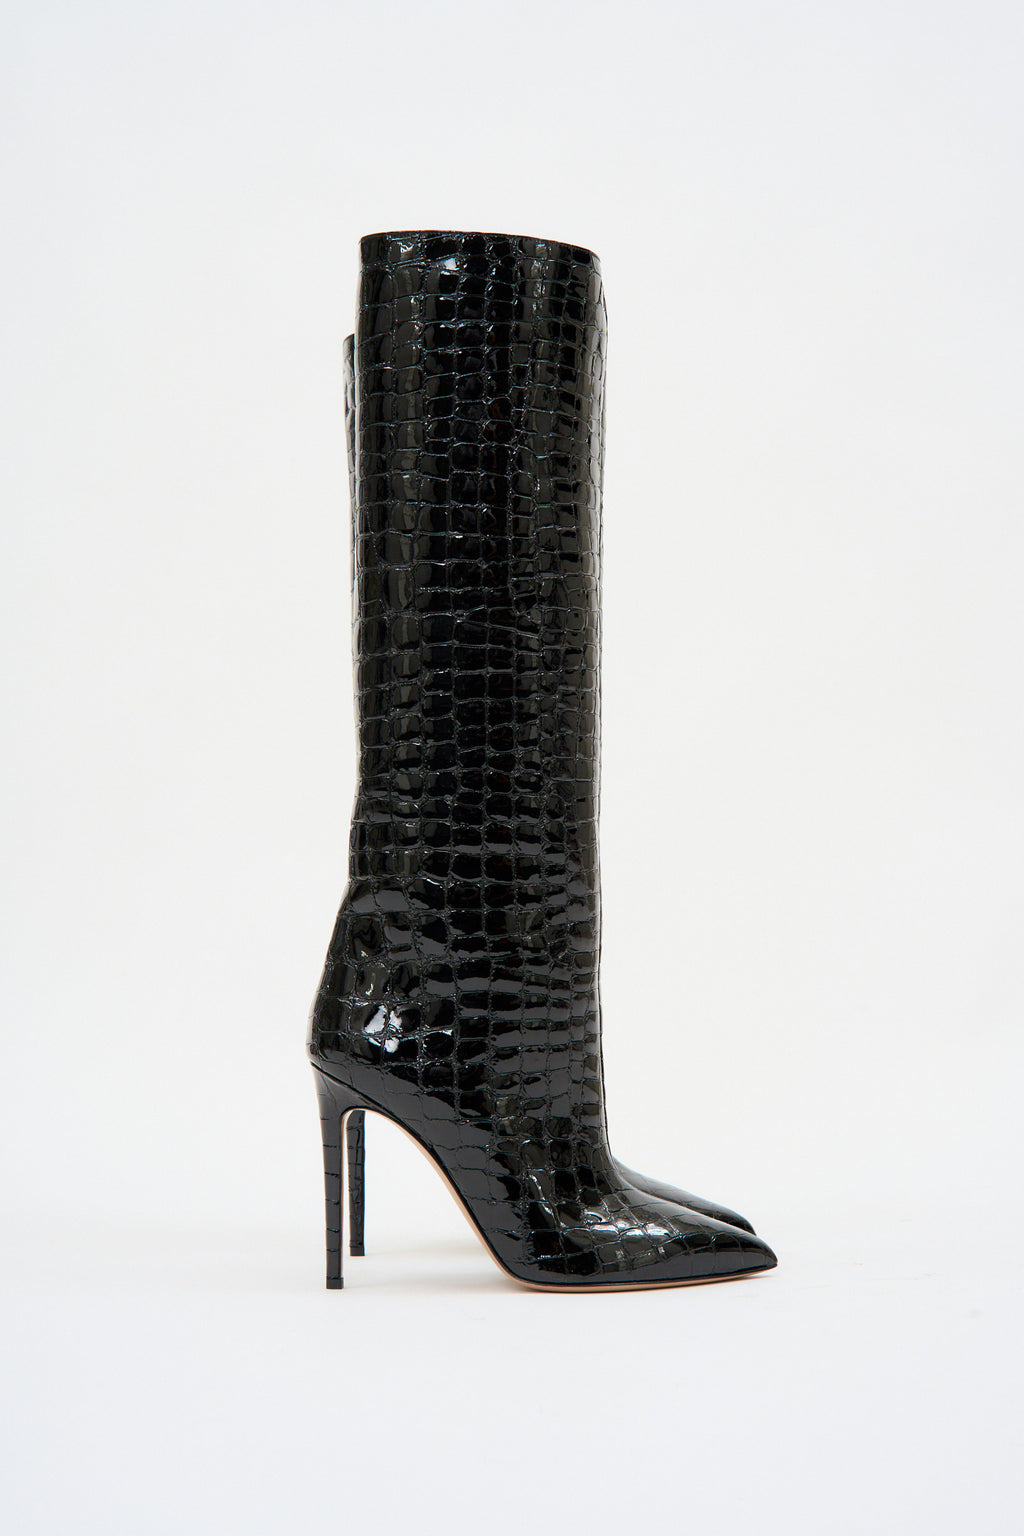 Glossy Embossed Croco Black Stiletto Boot